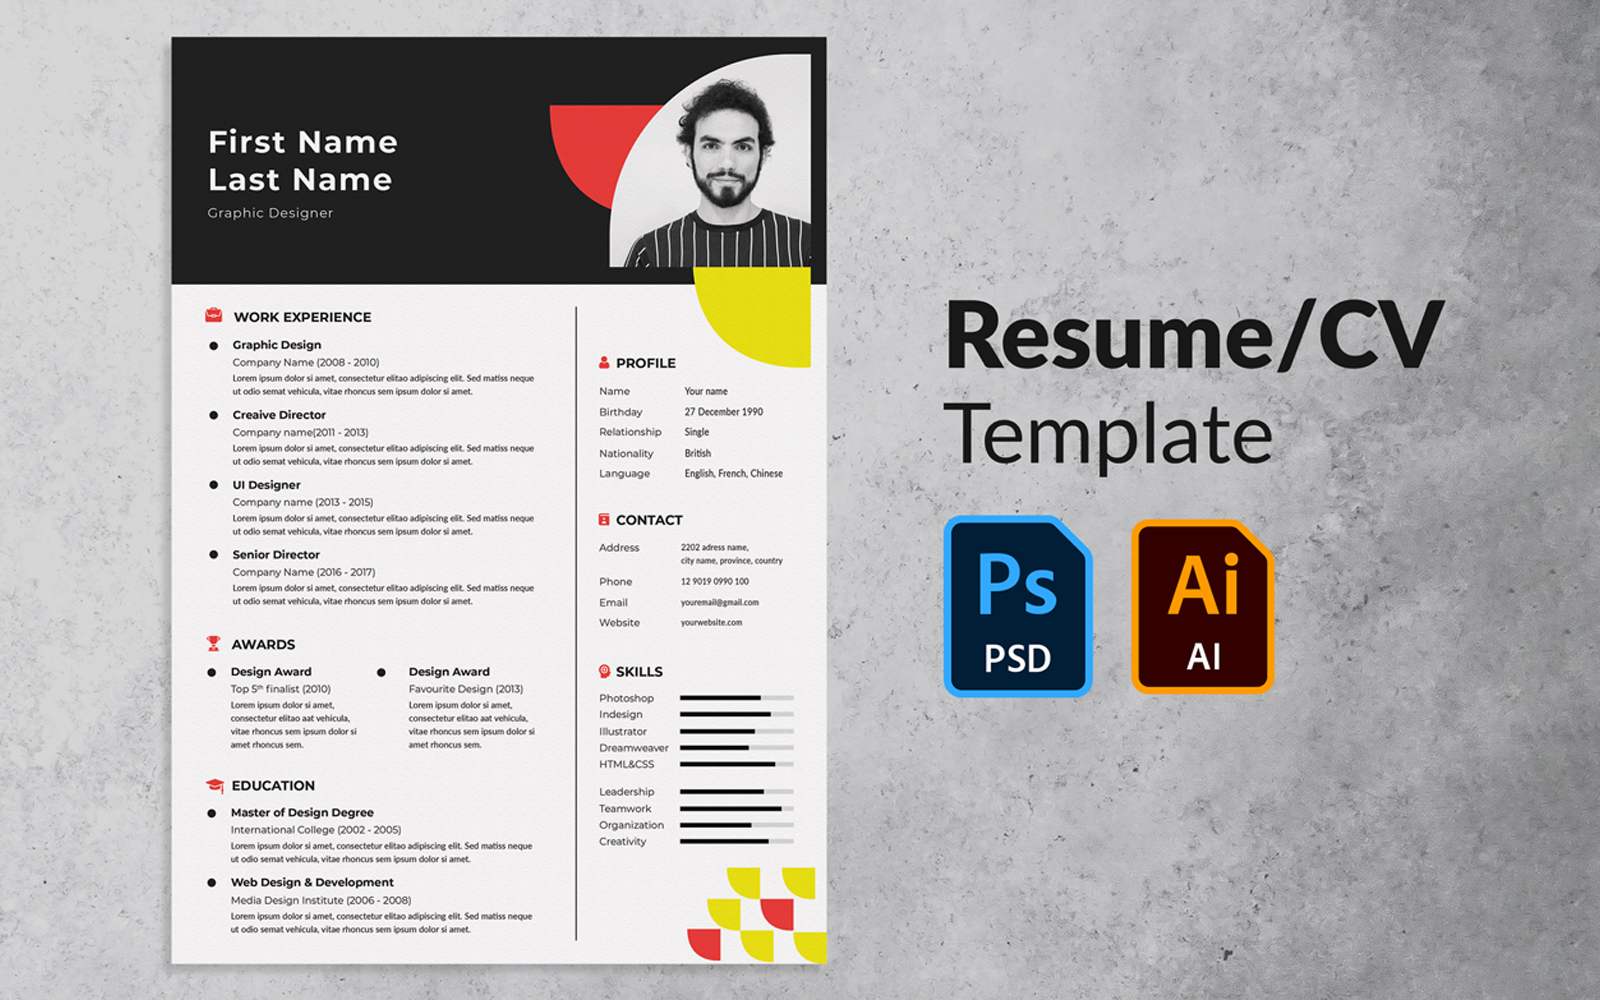 CV Template - Resume for Graphic designer or other designation